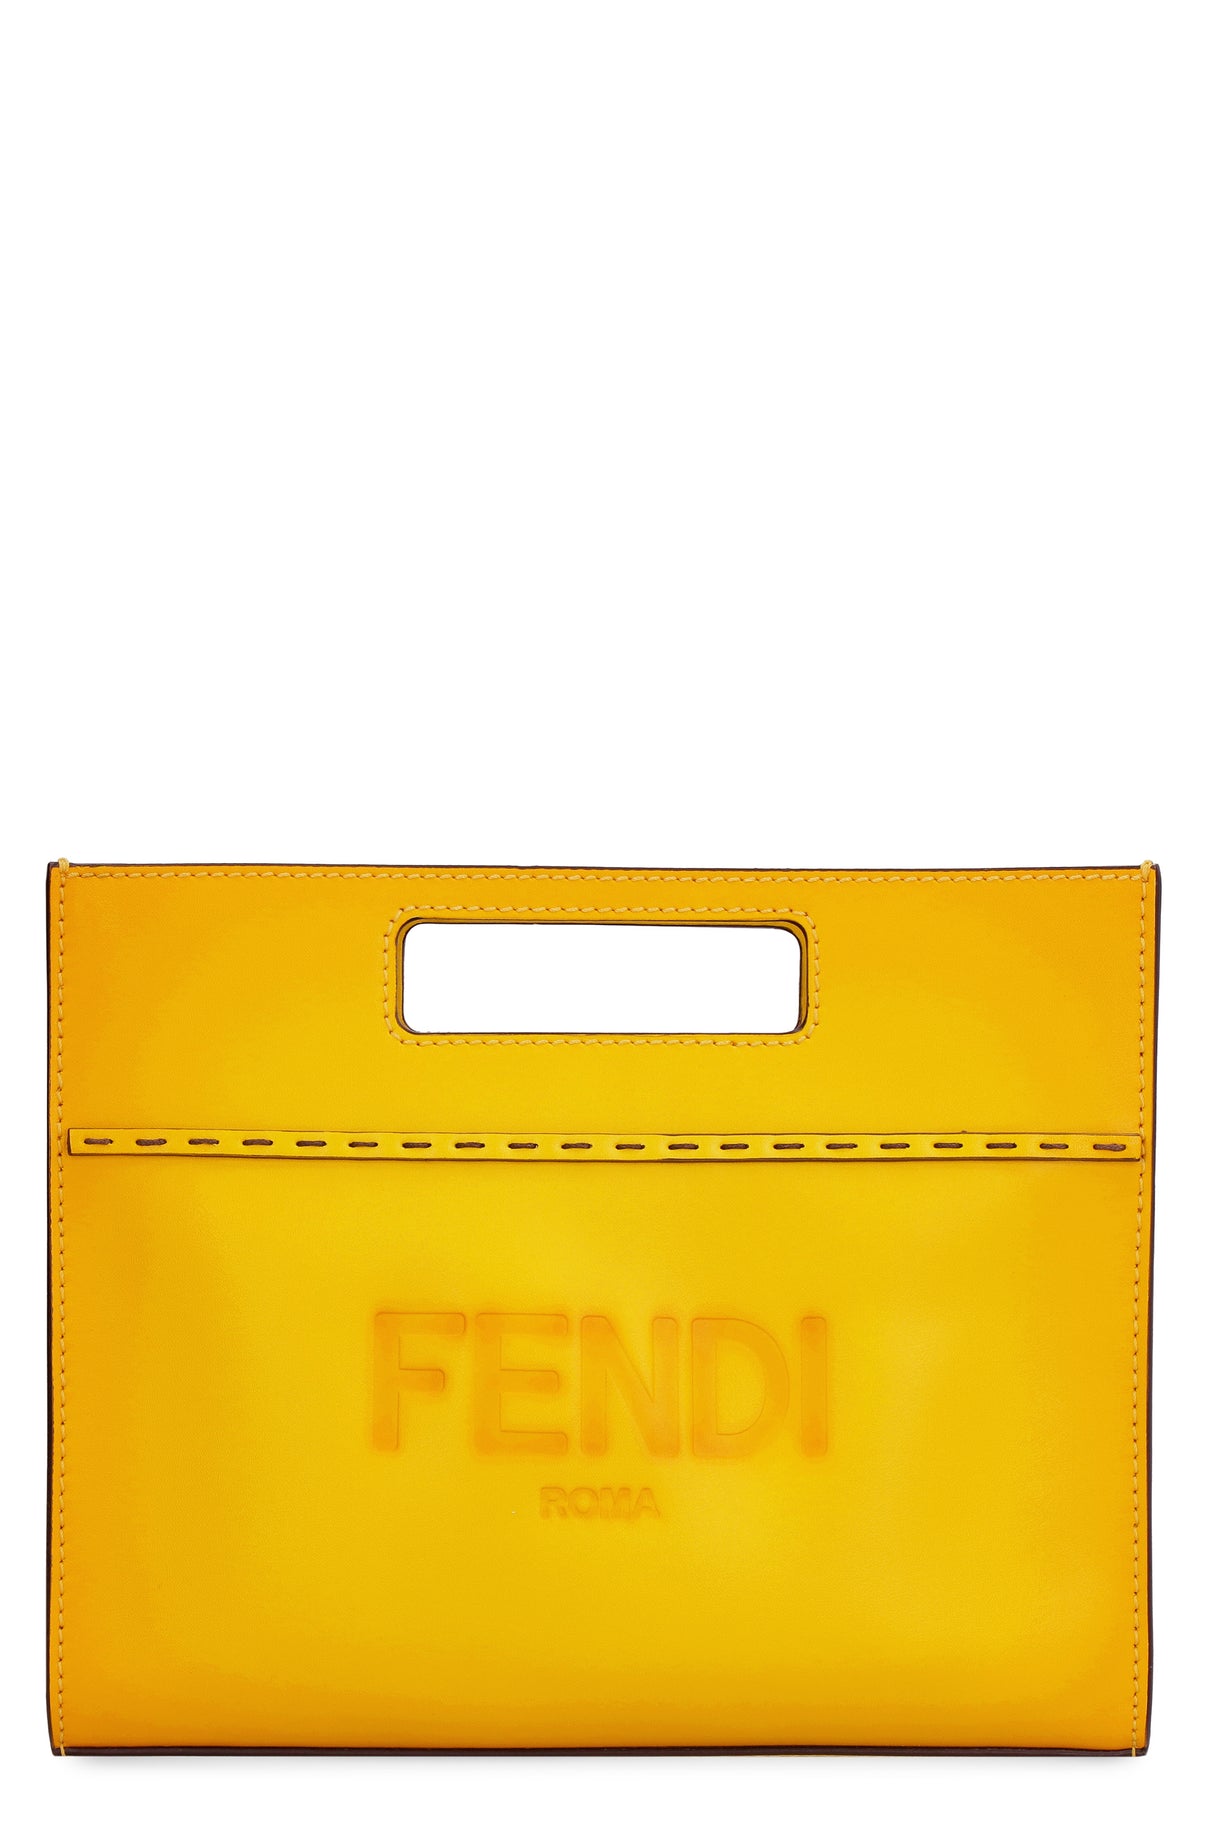 FENDI Yellow Leather Messenger Handbag for Men - SS22 Collection